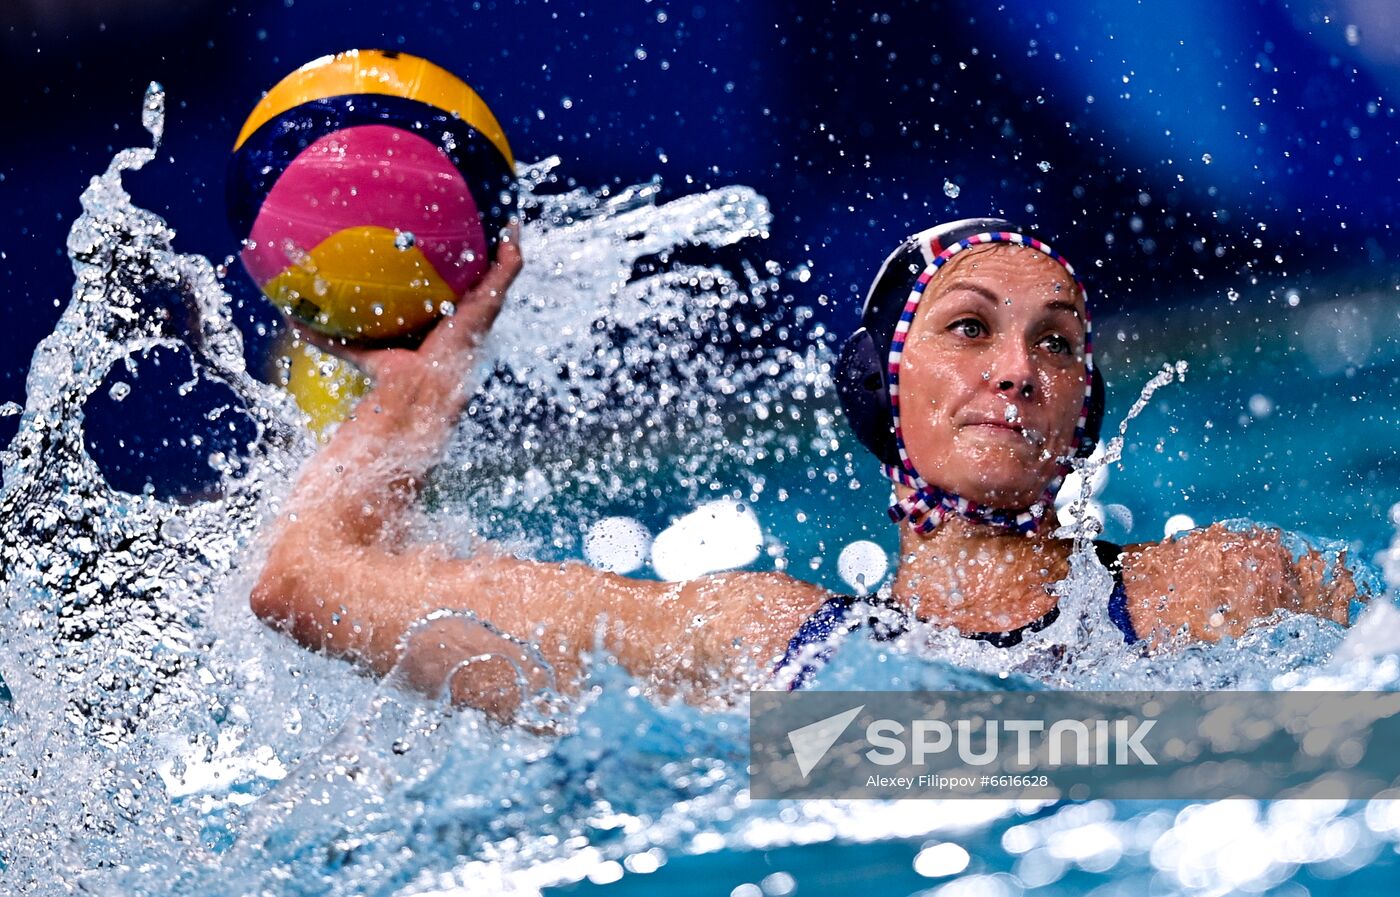 Japan Olympics 2020 Water Polo Women Australia - ROC